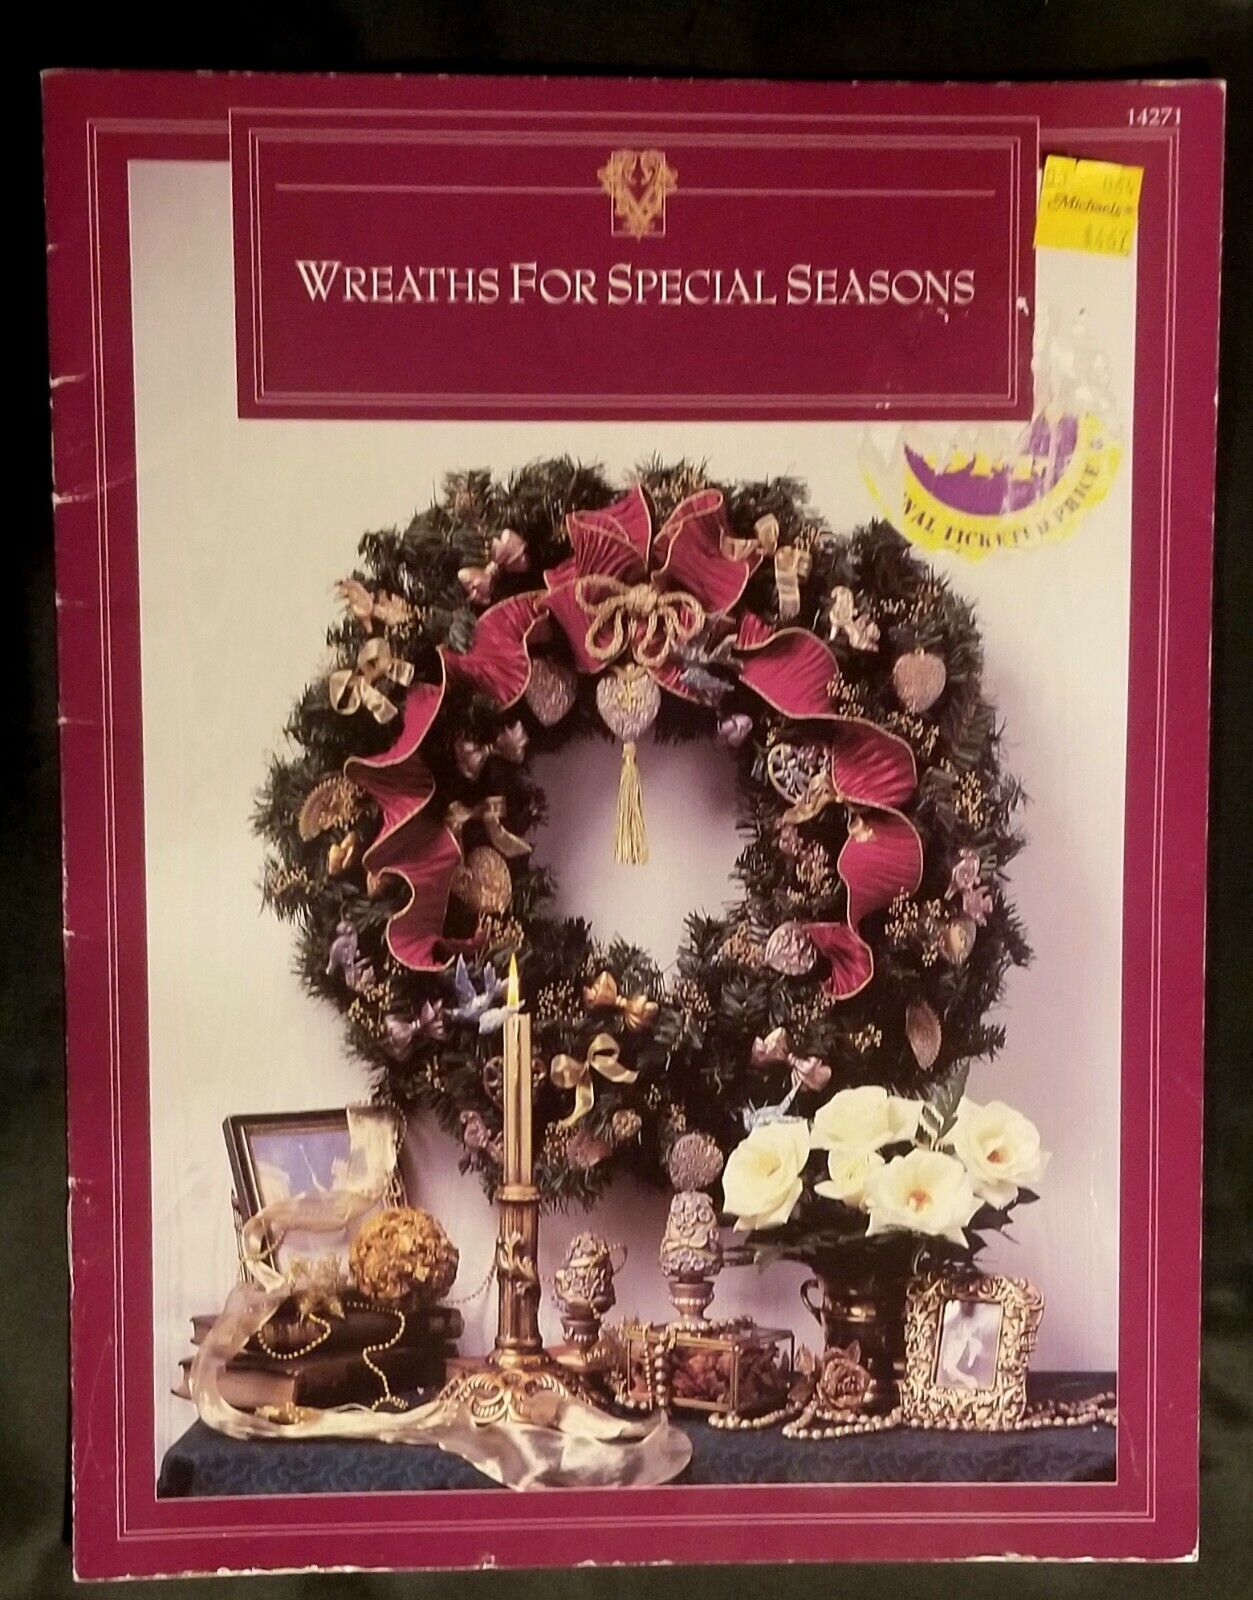 Vintage 1991 Wreaths For Special Seasons Craft Booklet # 14271 Joni Prittie